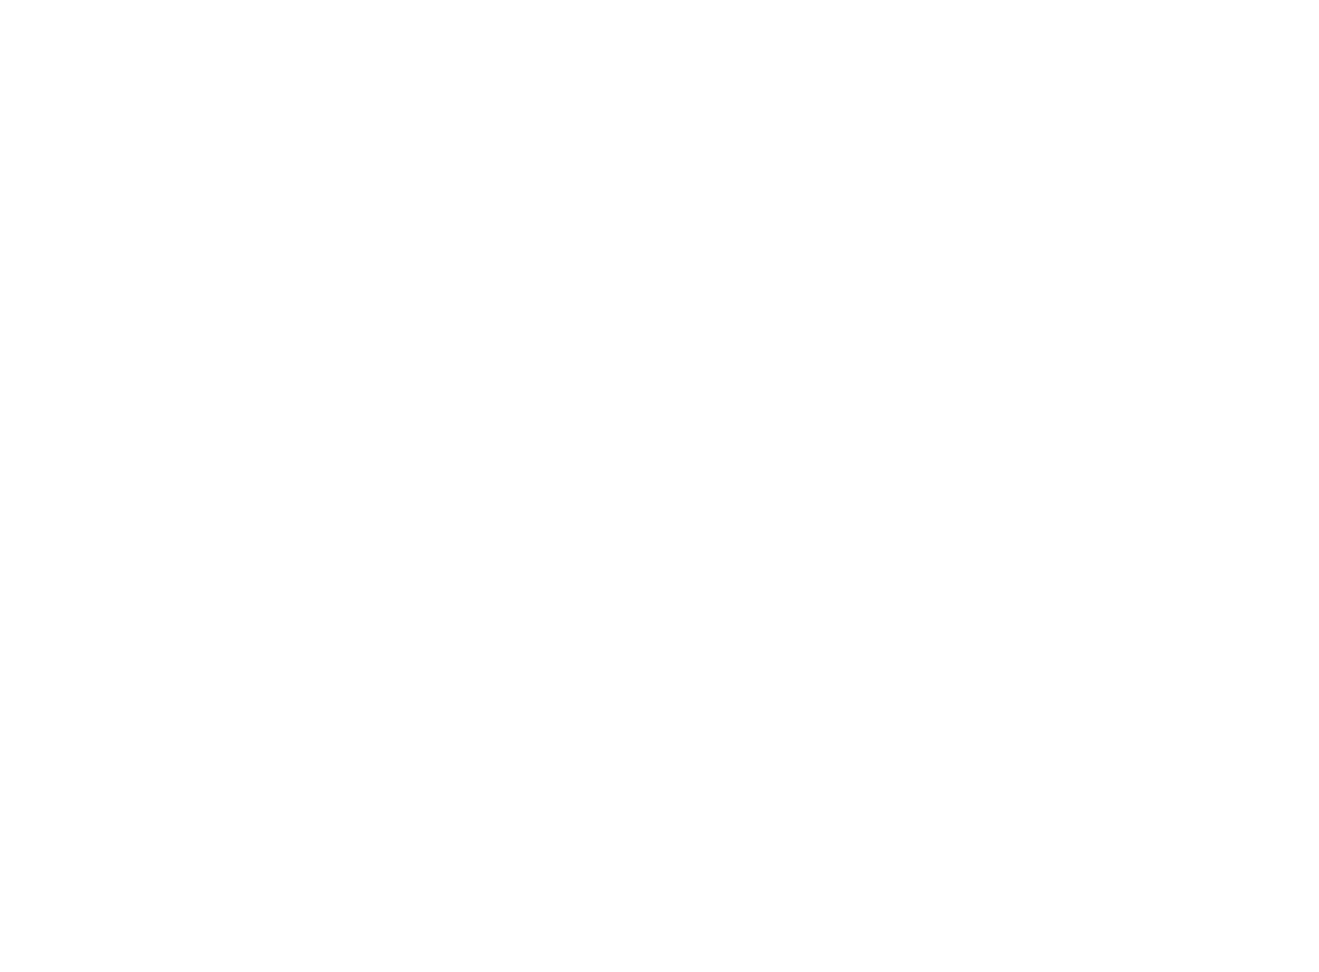 Strait Area Transit